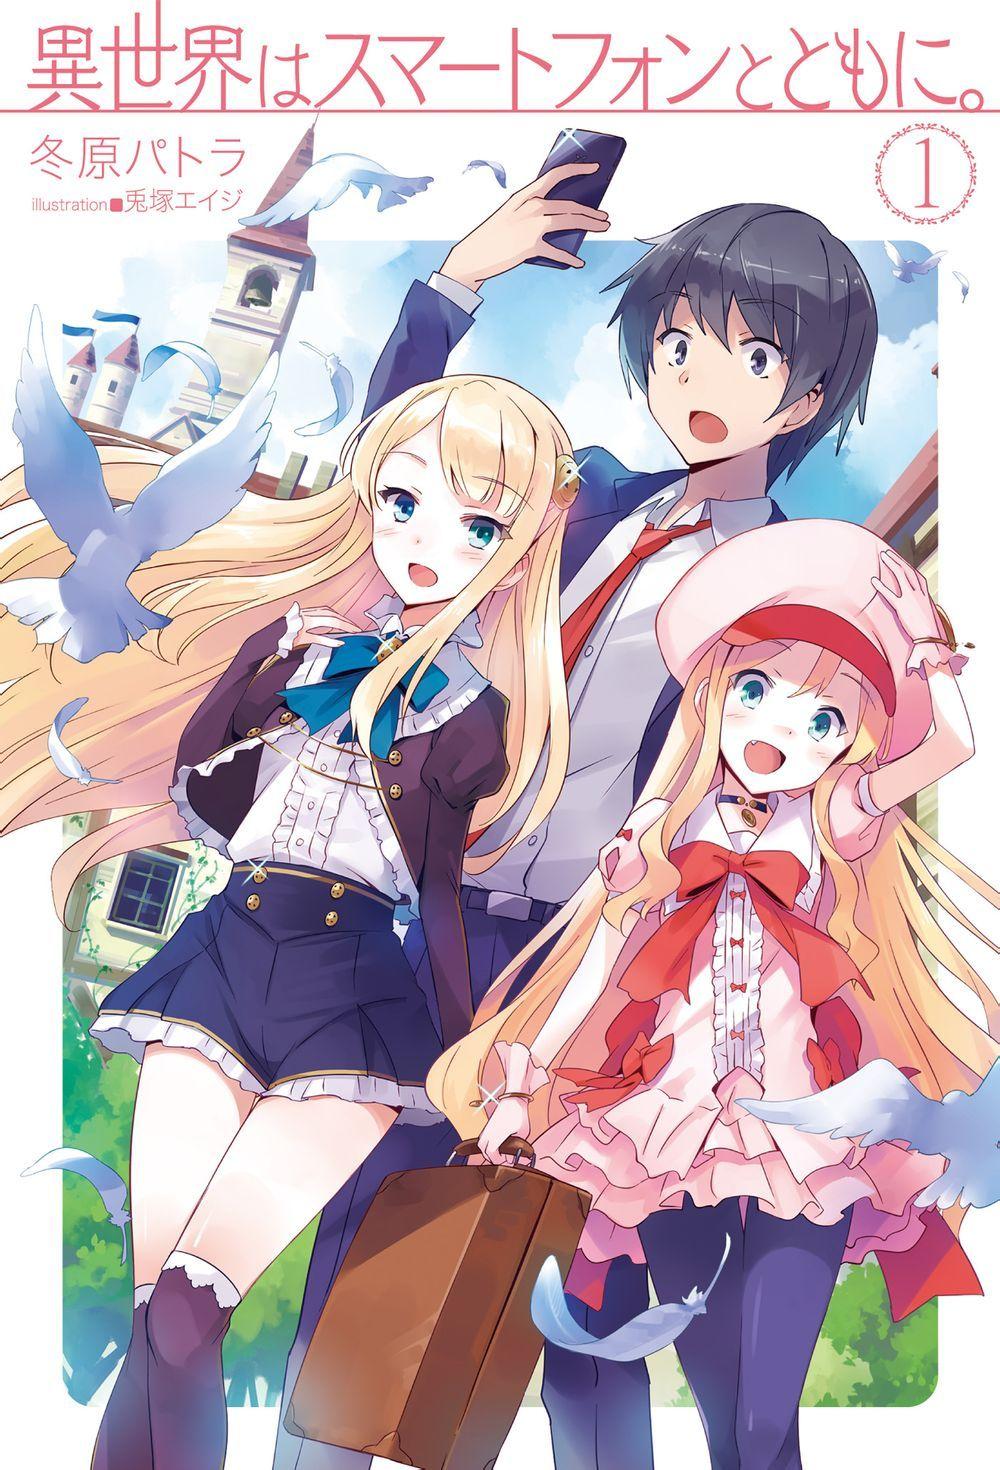 Isekai ha Smartphone Vol 1. Anime, Light novel, Smartphone